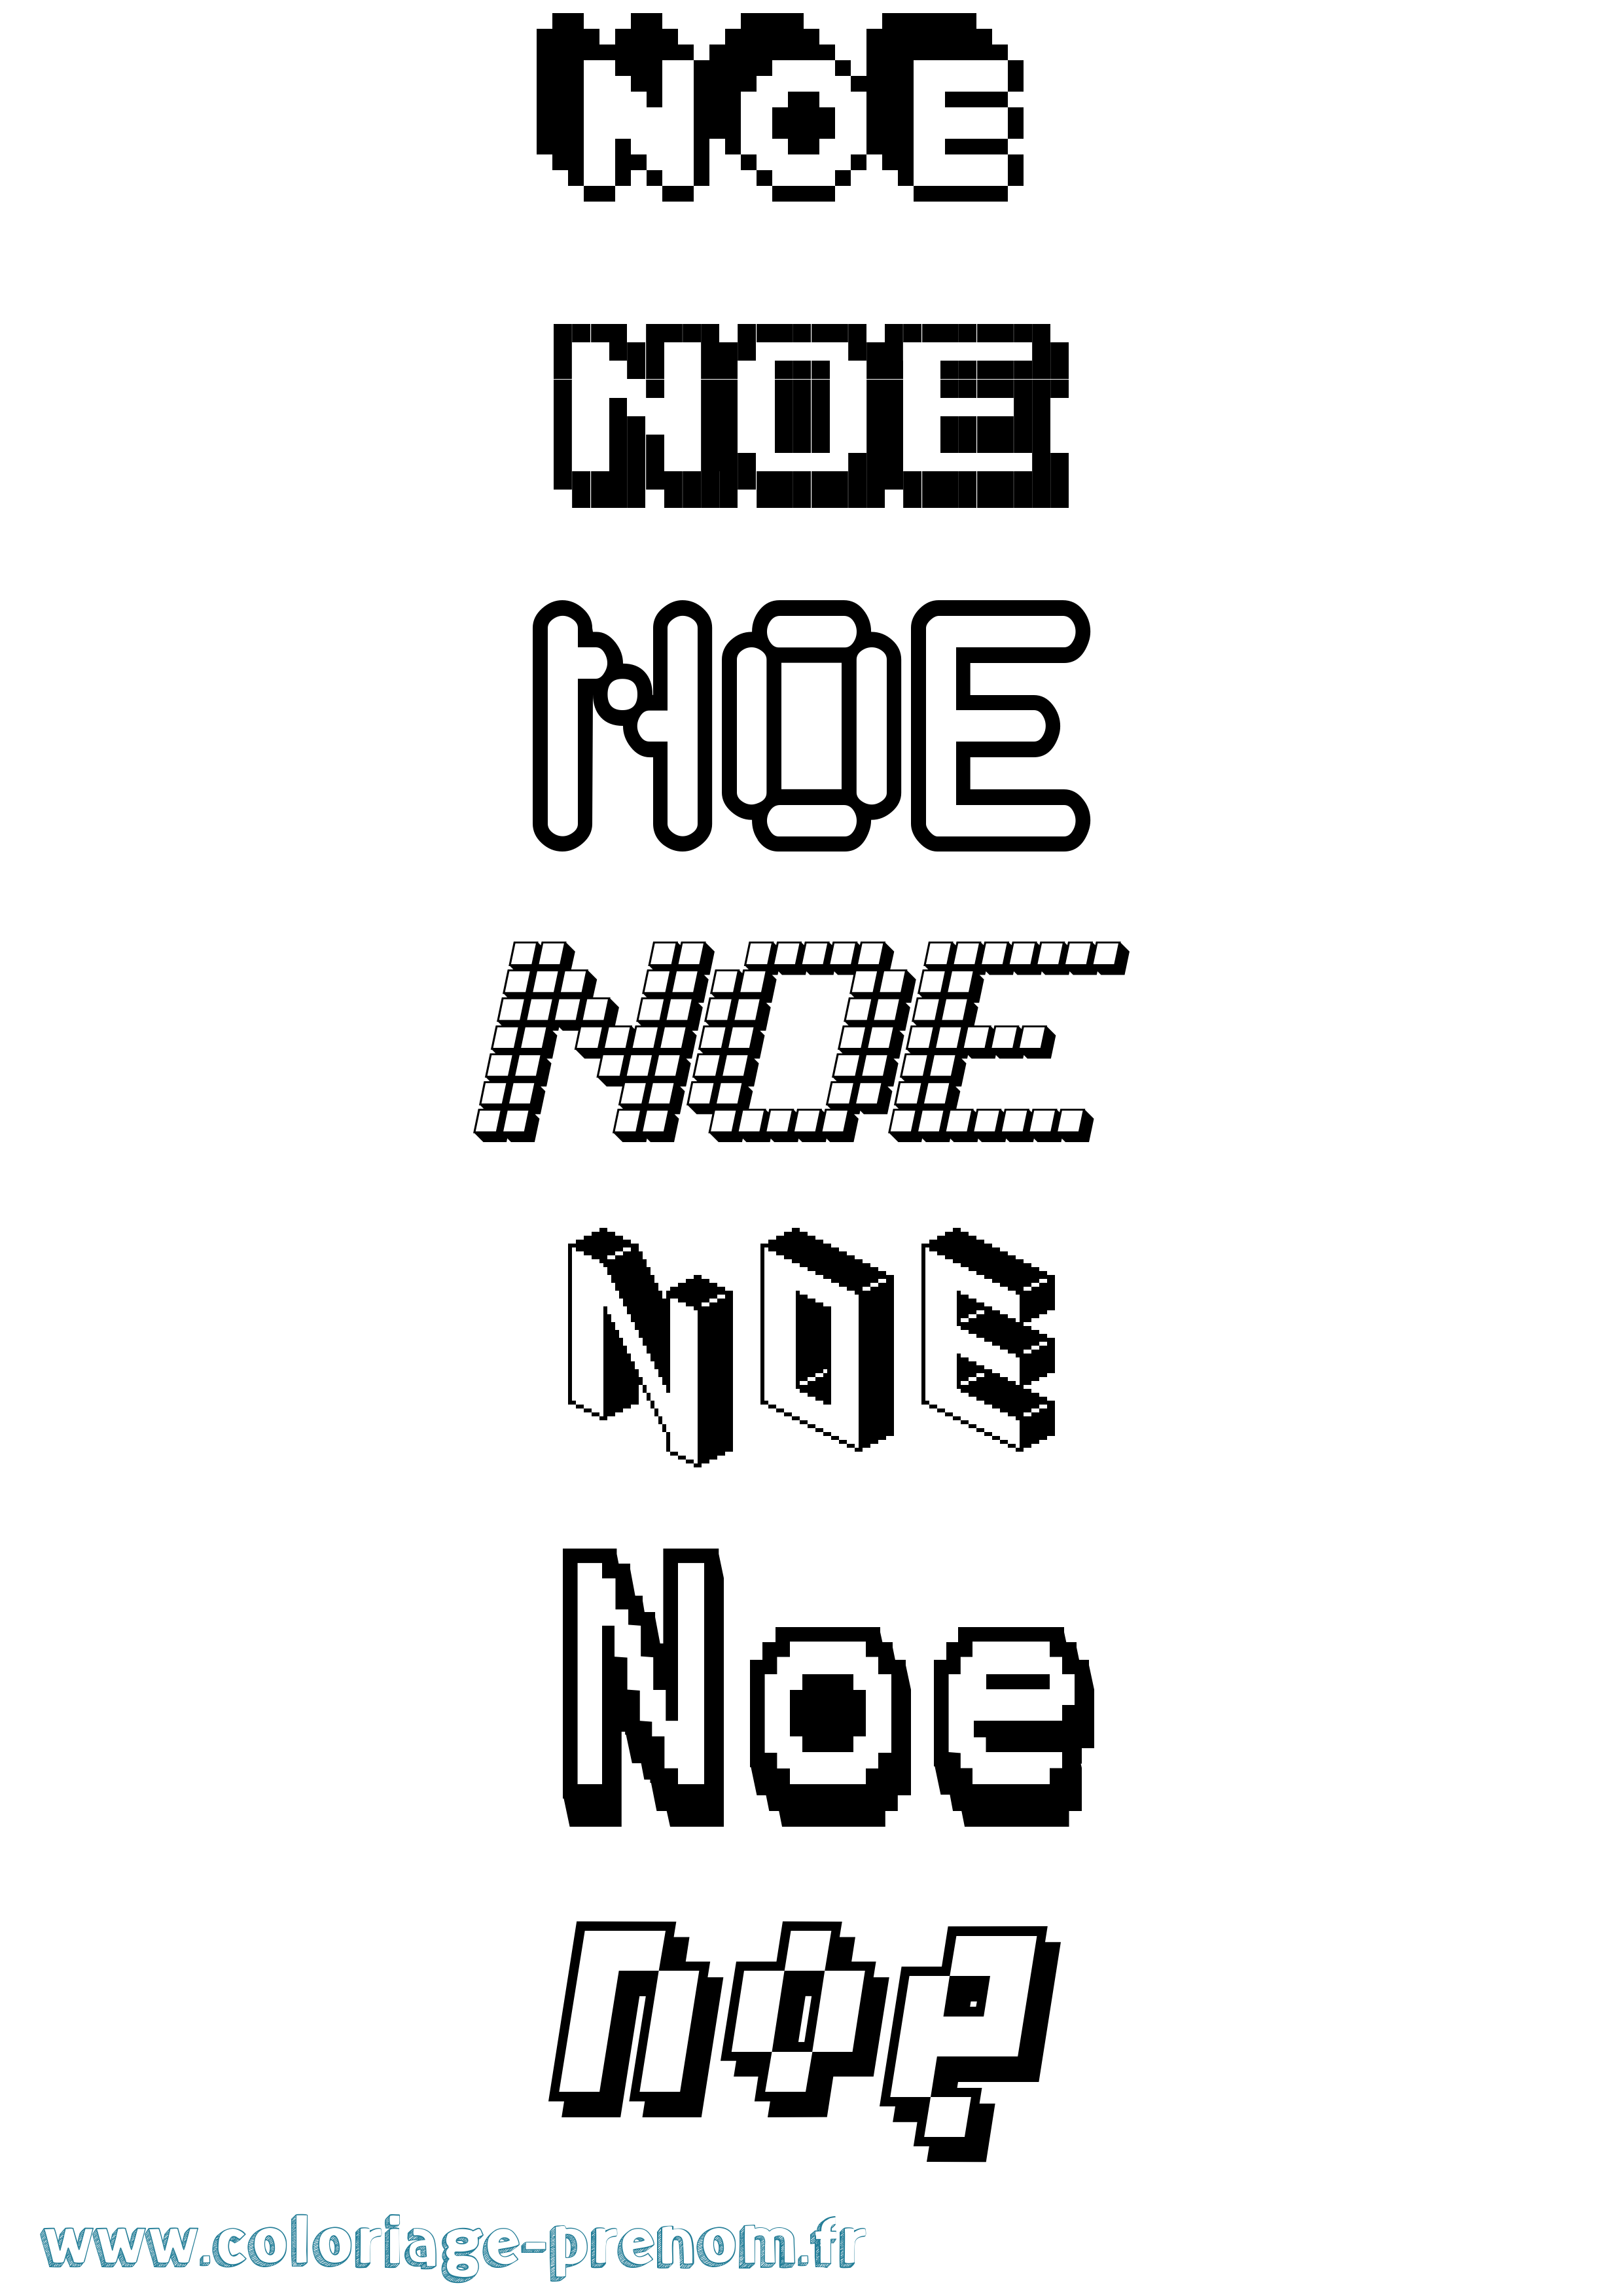 Coloriage prénom Noe Pixel